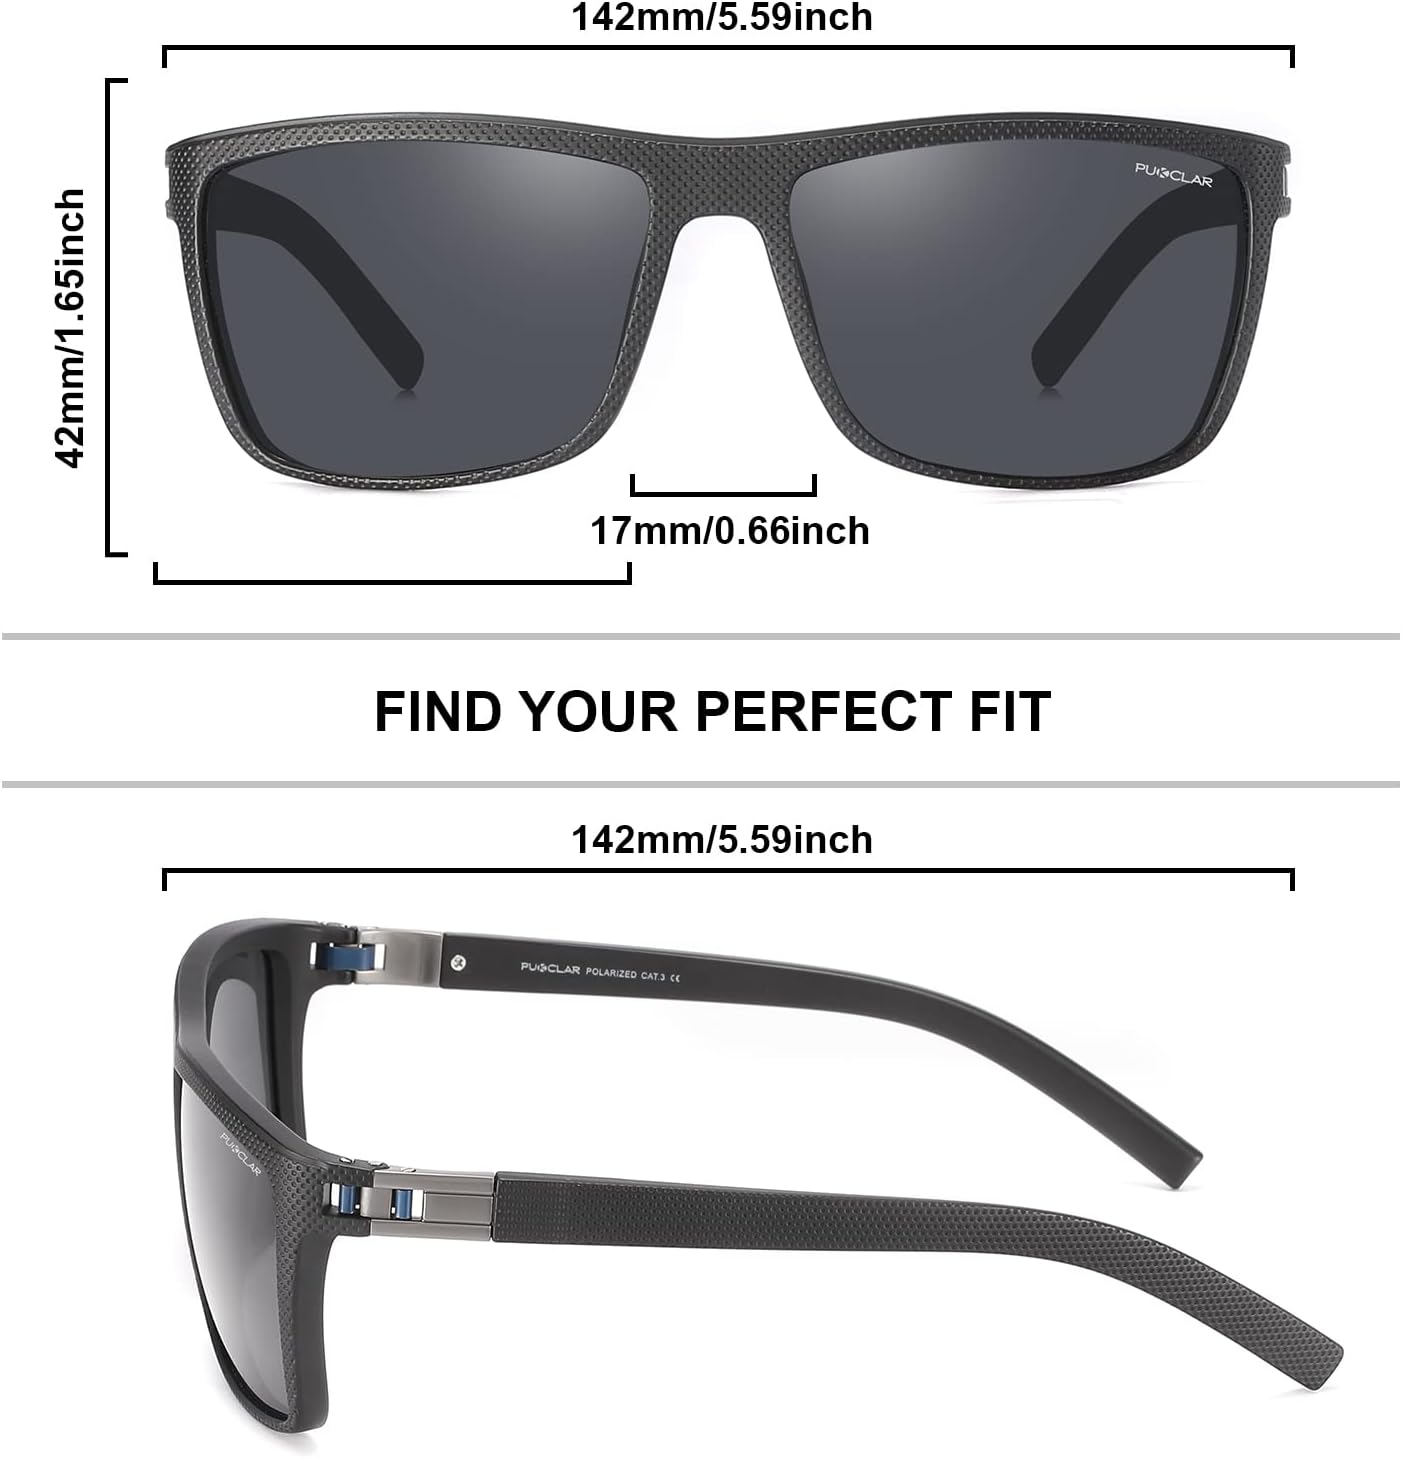 PUKCLAR Sunglasses for Men Polarized Lightweight TR90 Frame UV400 Spring Hinges Sunglasses, Please identify PUKCLAR